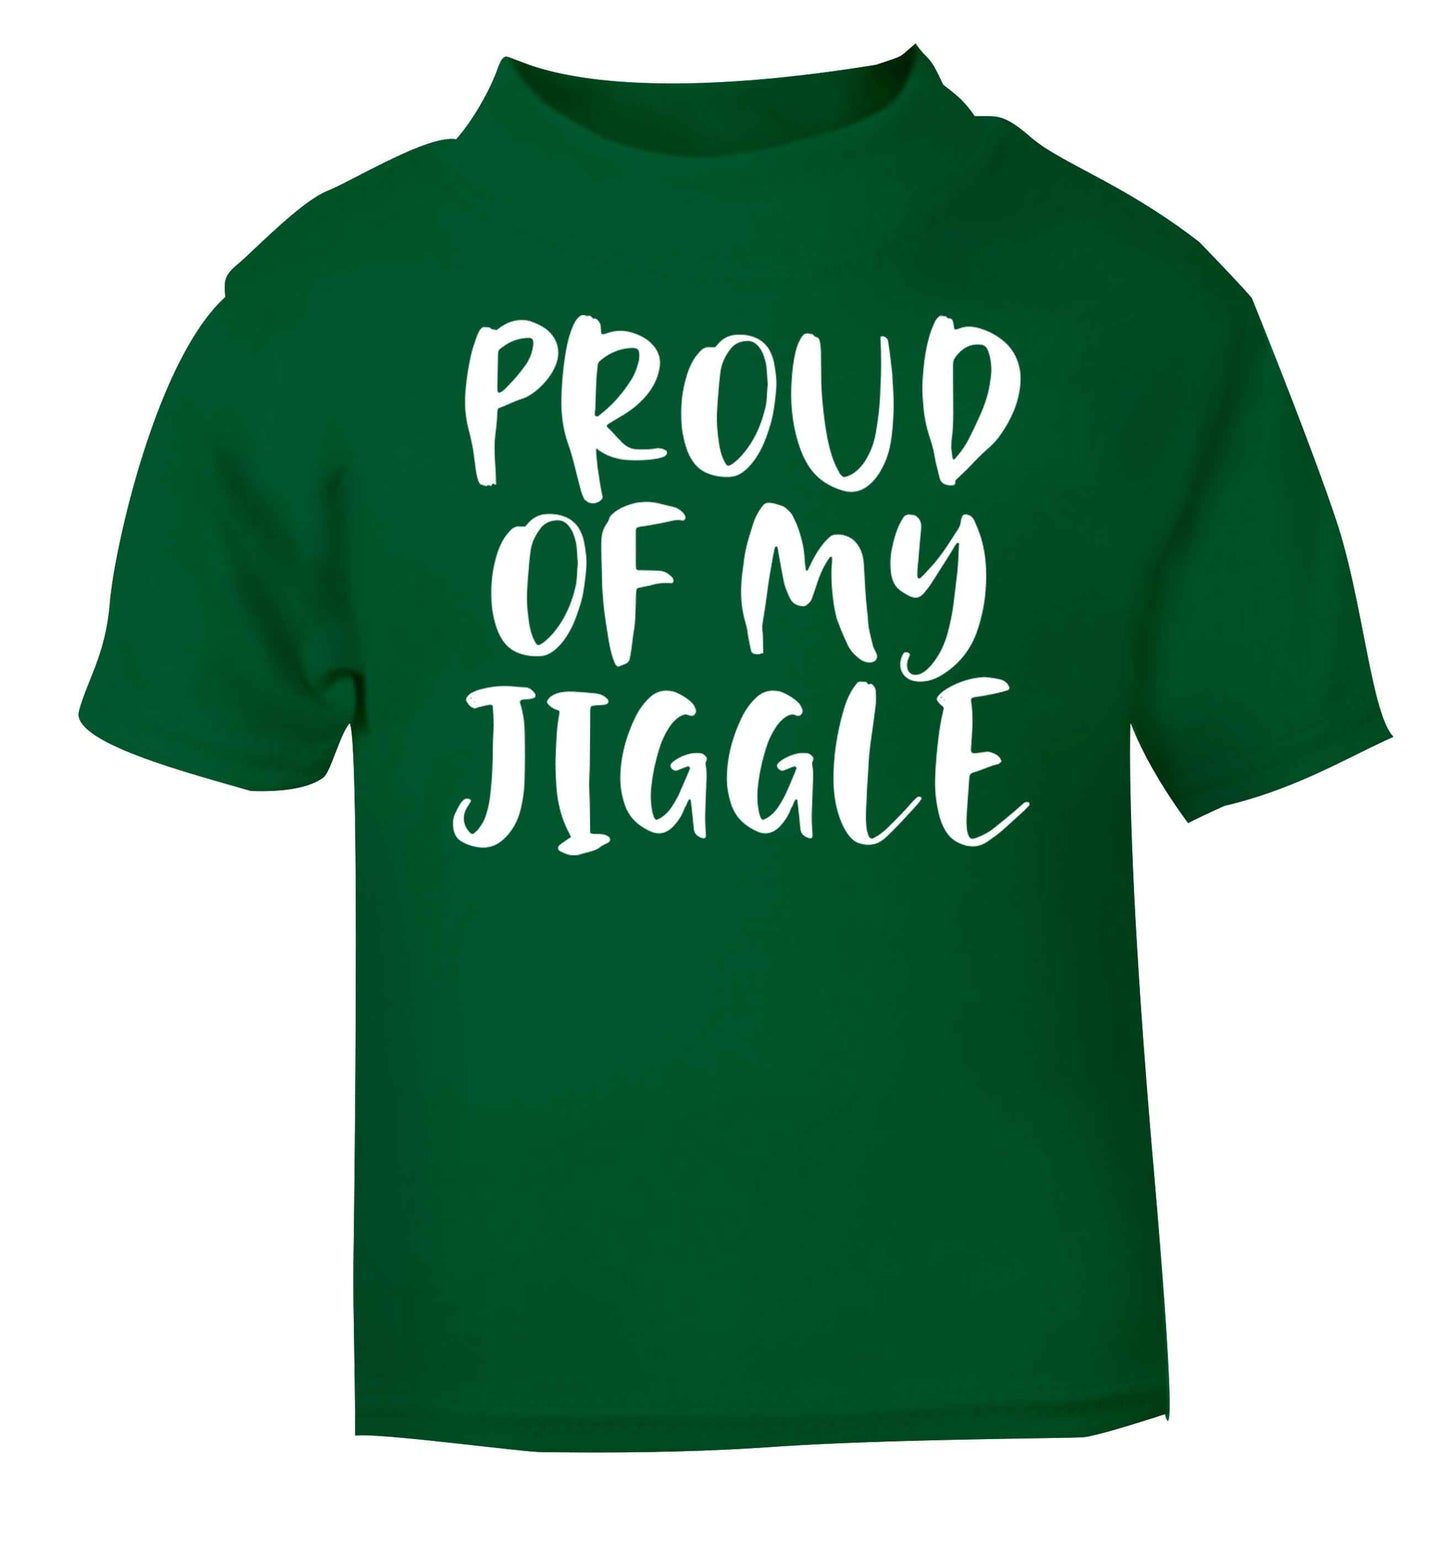 Proud of my jiggle green baby toddler Tshirt 2 Years